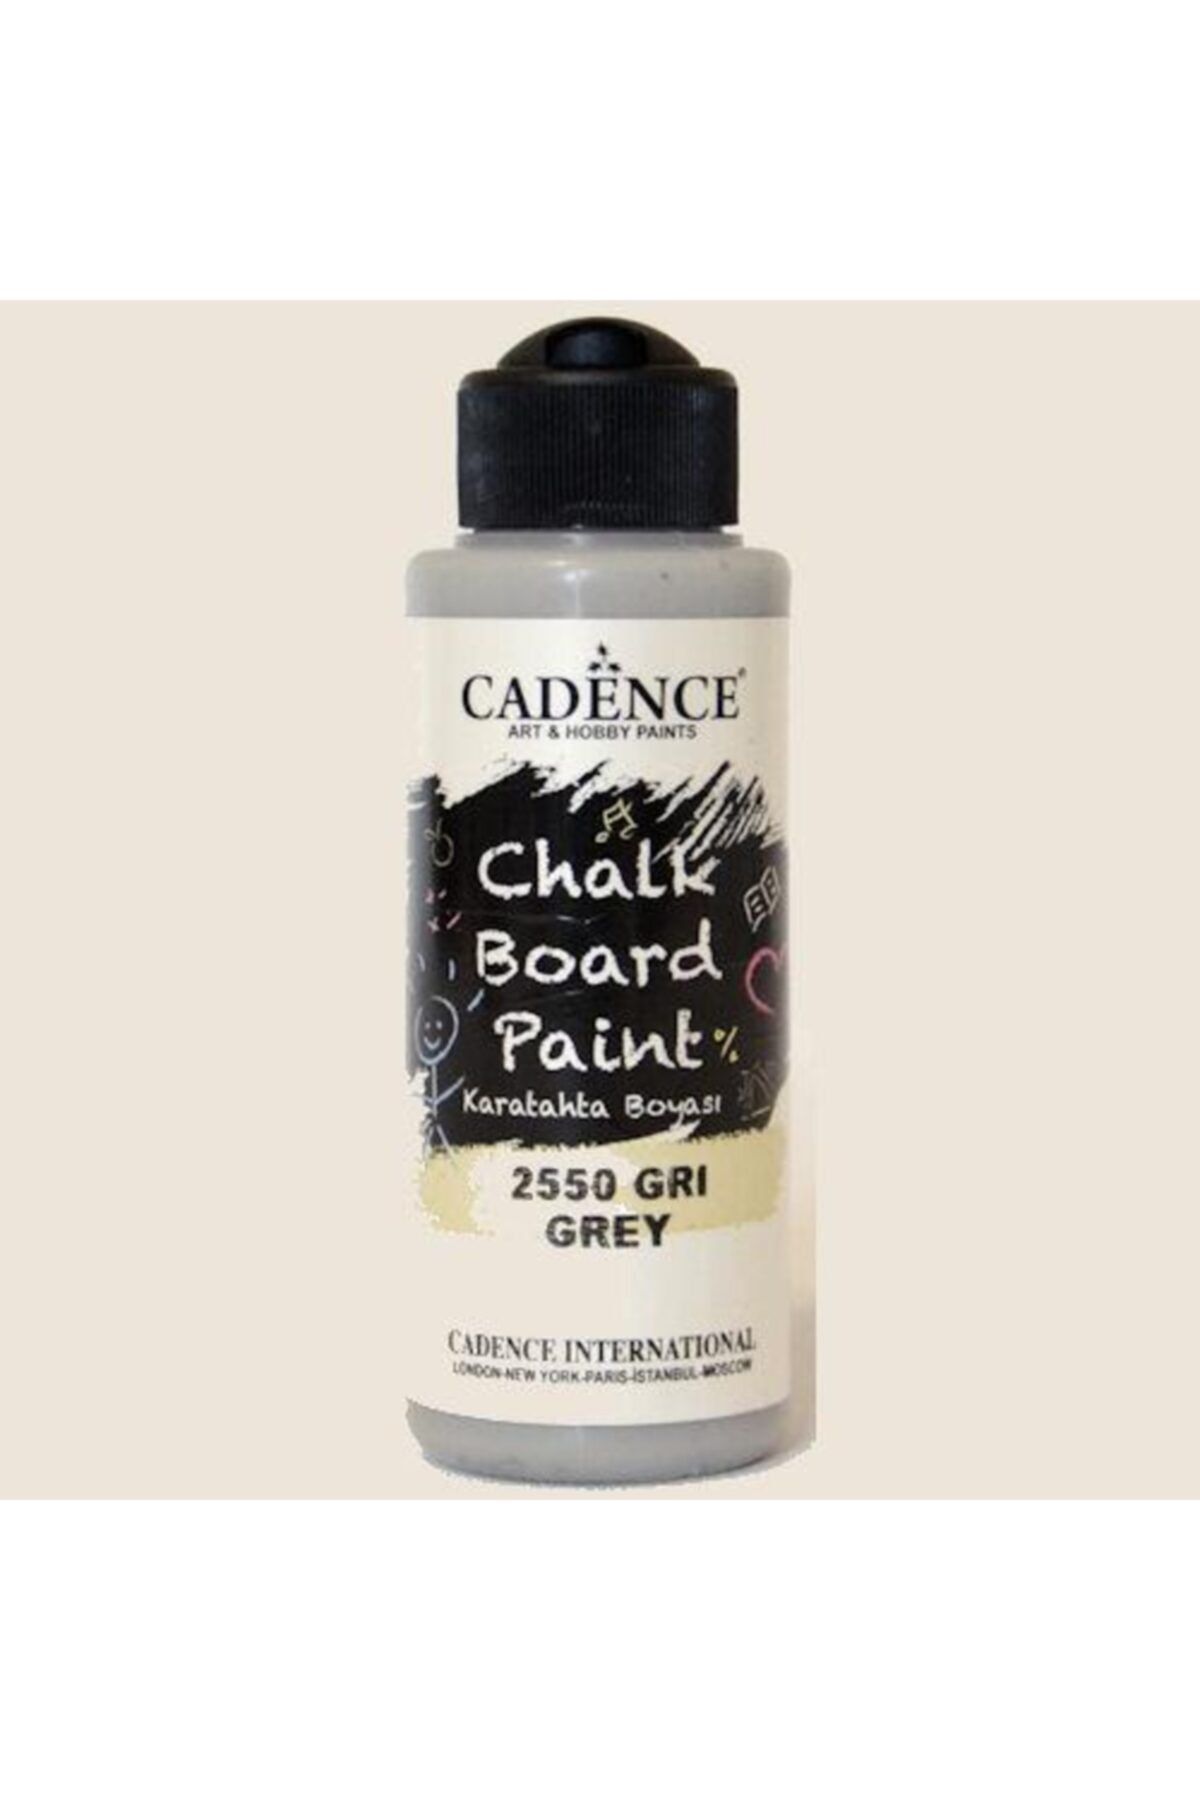 Cadence Gri Chalkboard Paint 120ml Kara Tahta Boyası 2550